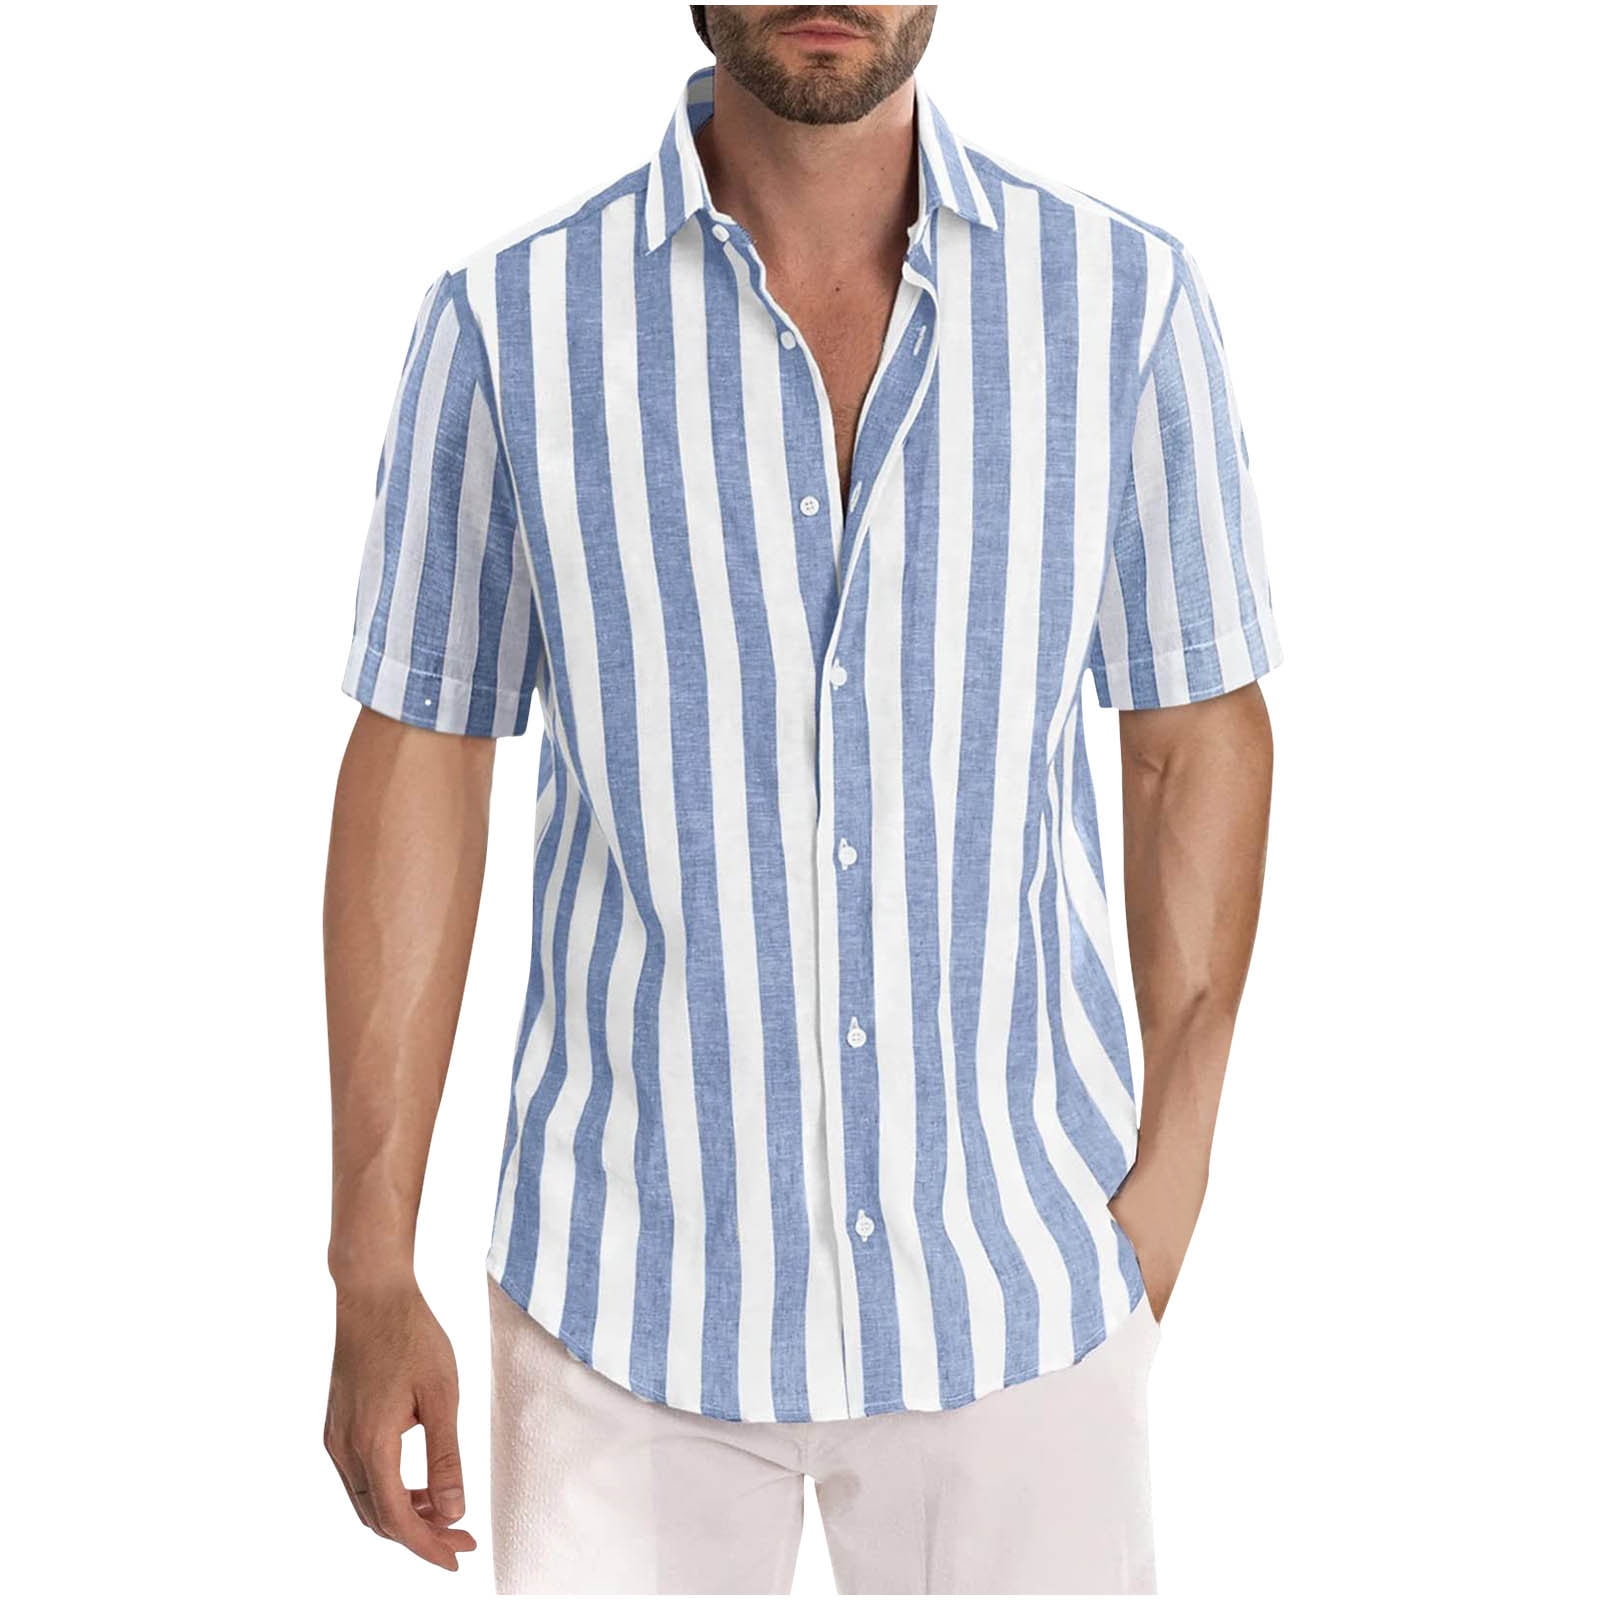 ZCFZJW 100% Cotton Regular Fit Short Sleeve Casual Hawaiian Shirt